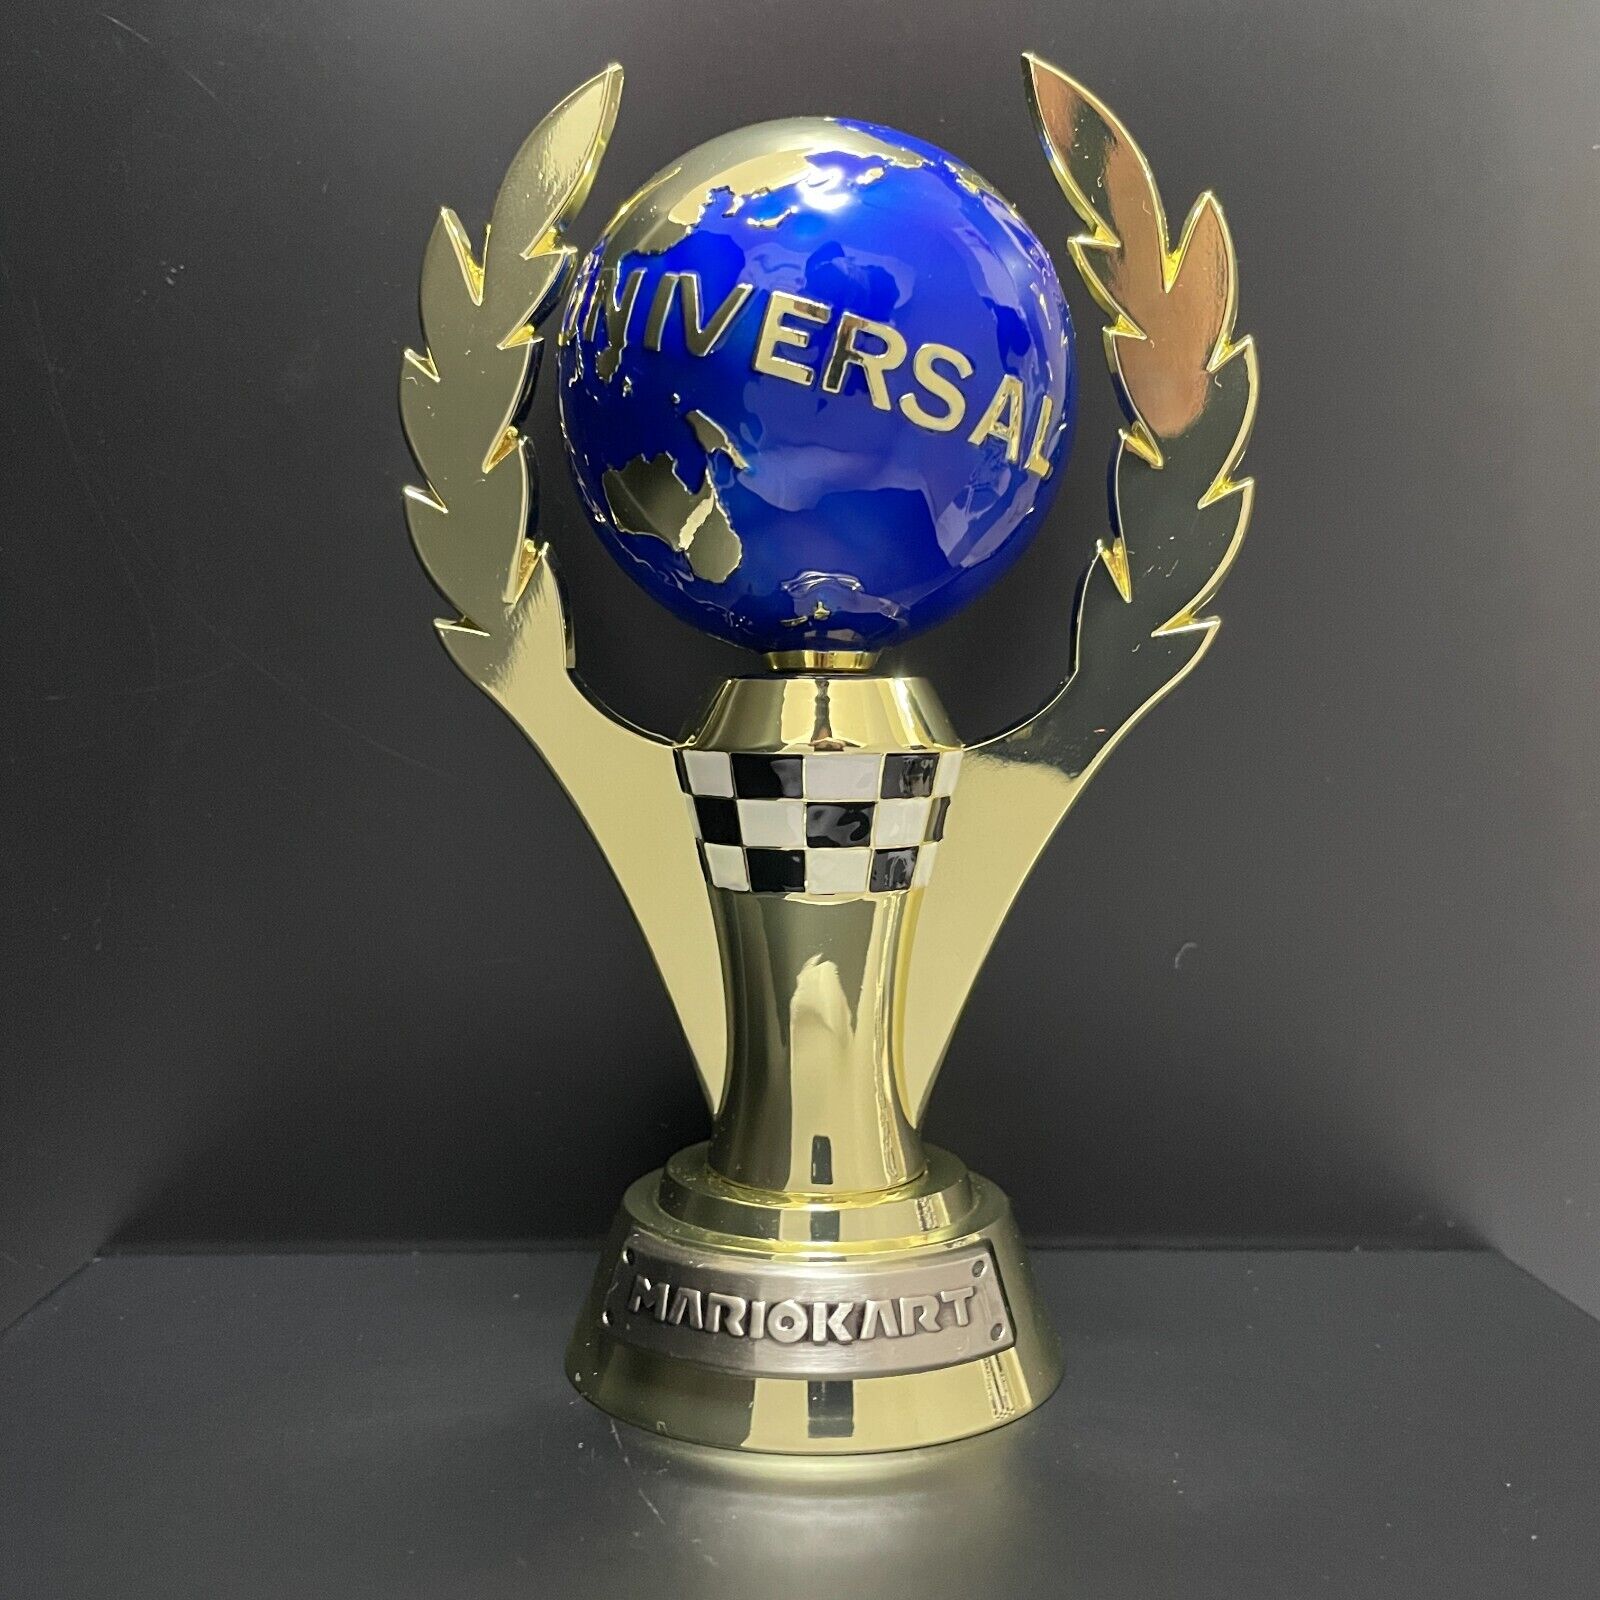 USJ Super Nintendo World MARIO Kart Golden Cup trophy figurine object Ornament